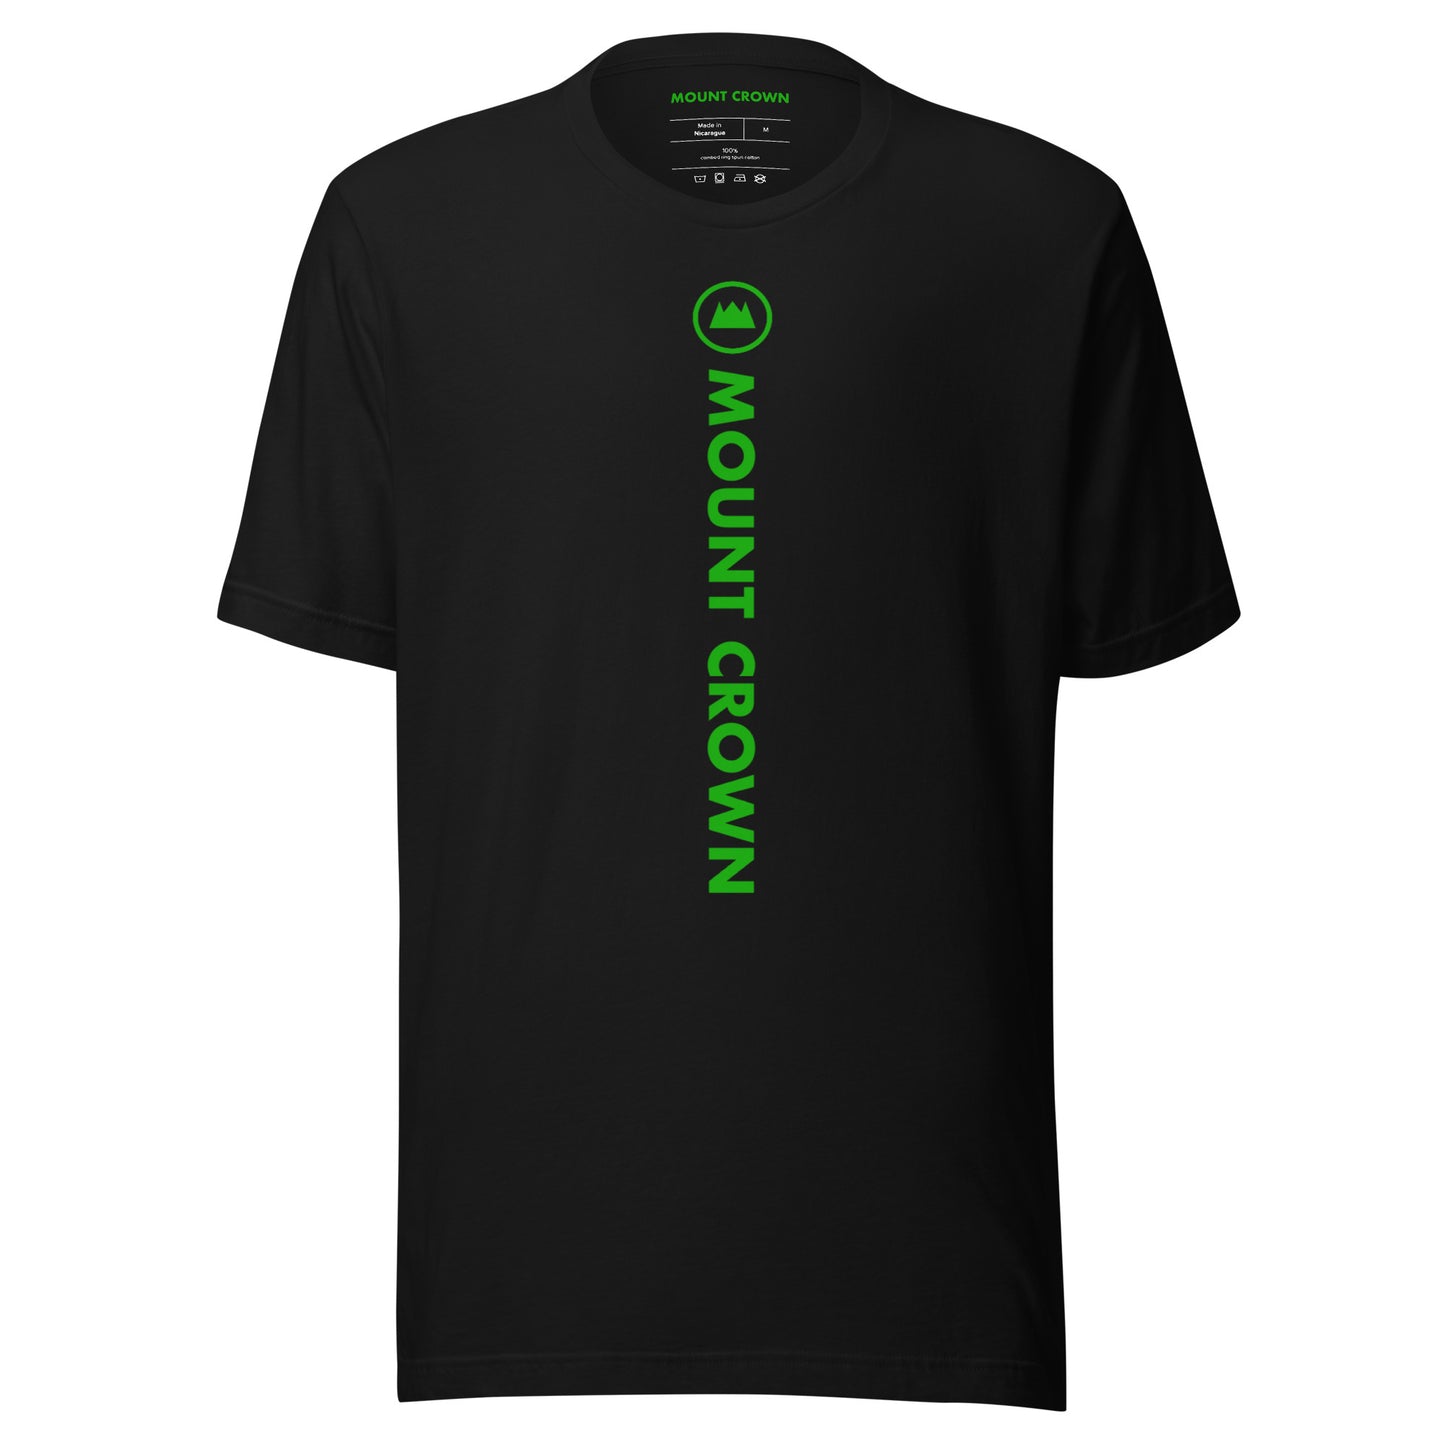 MOUNT CROWN (Gr)2 T-shirt